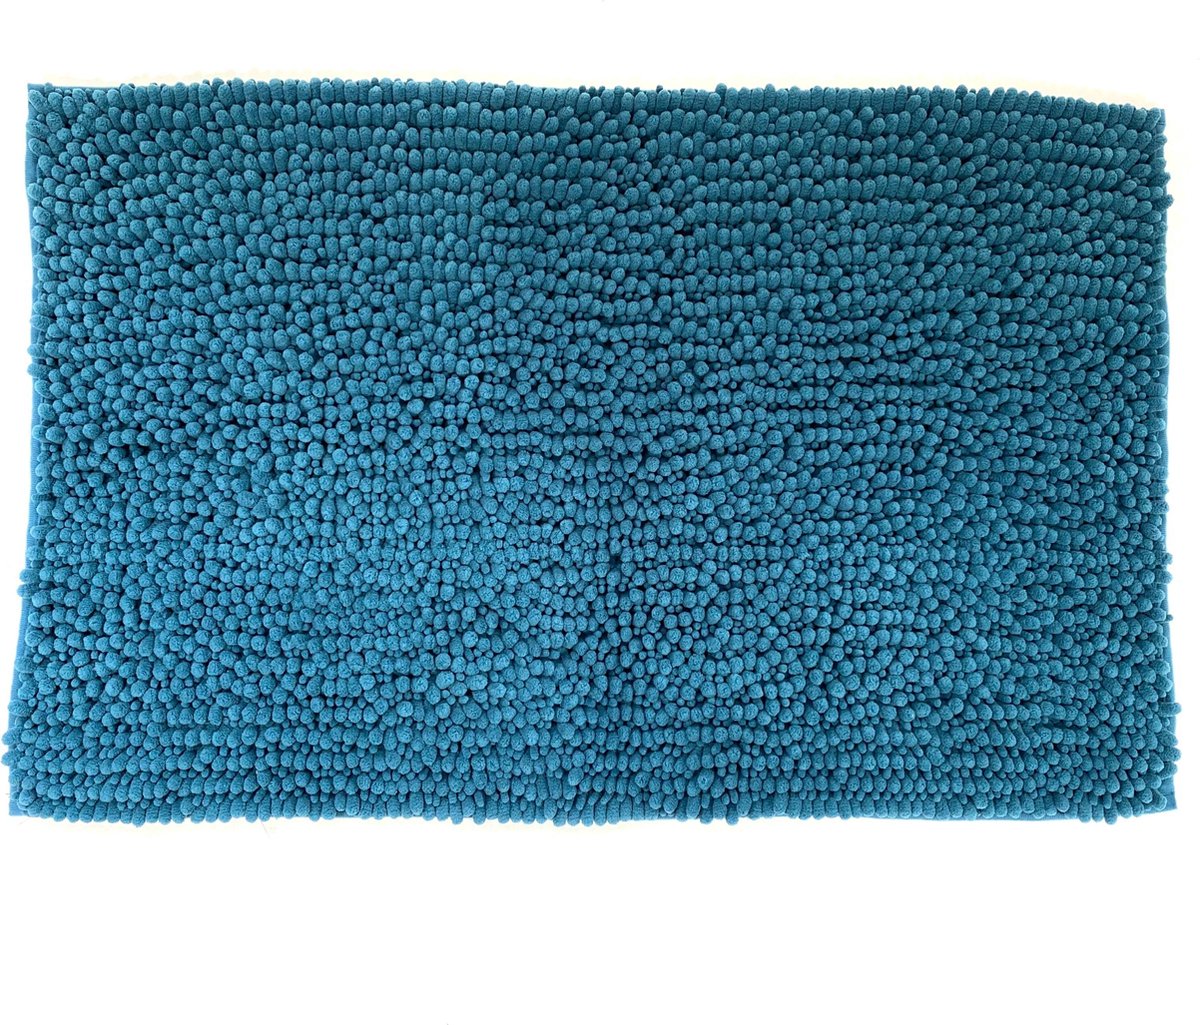 Lucy's Living Luxe badmat POL Turquoise Limited Edition- 50 x 80 cm - grijs - badkamer mat - badmatten - badtextiel - wonen - accessoires